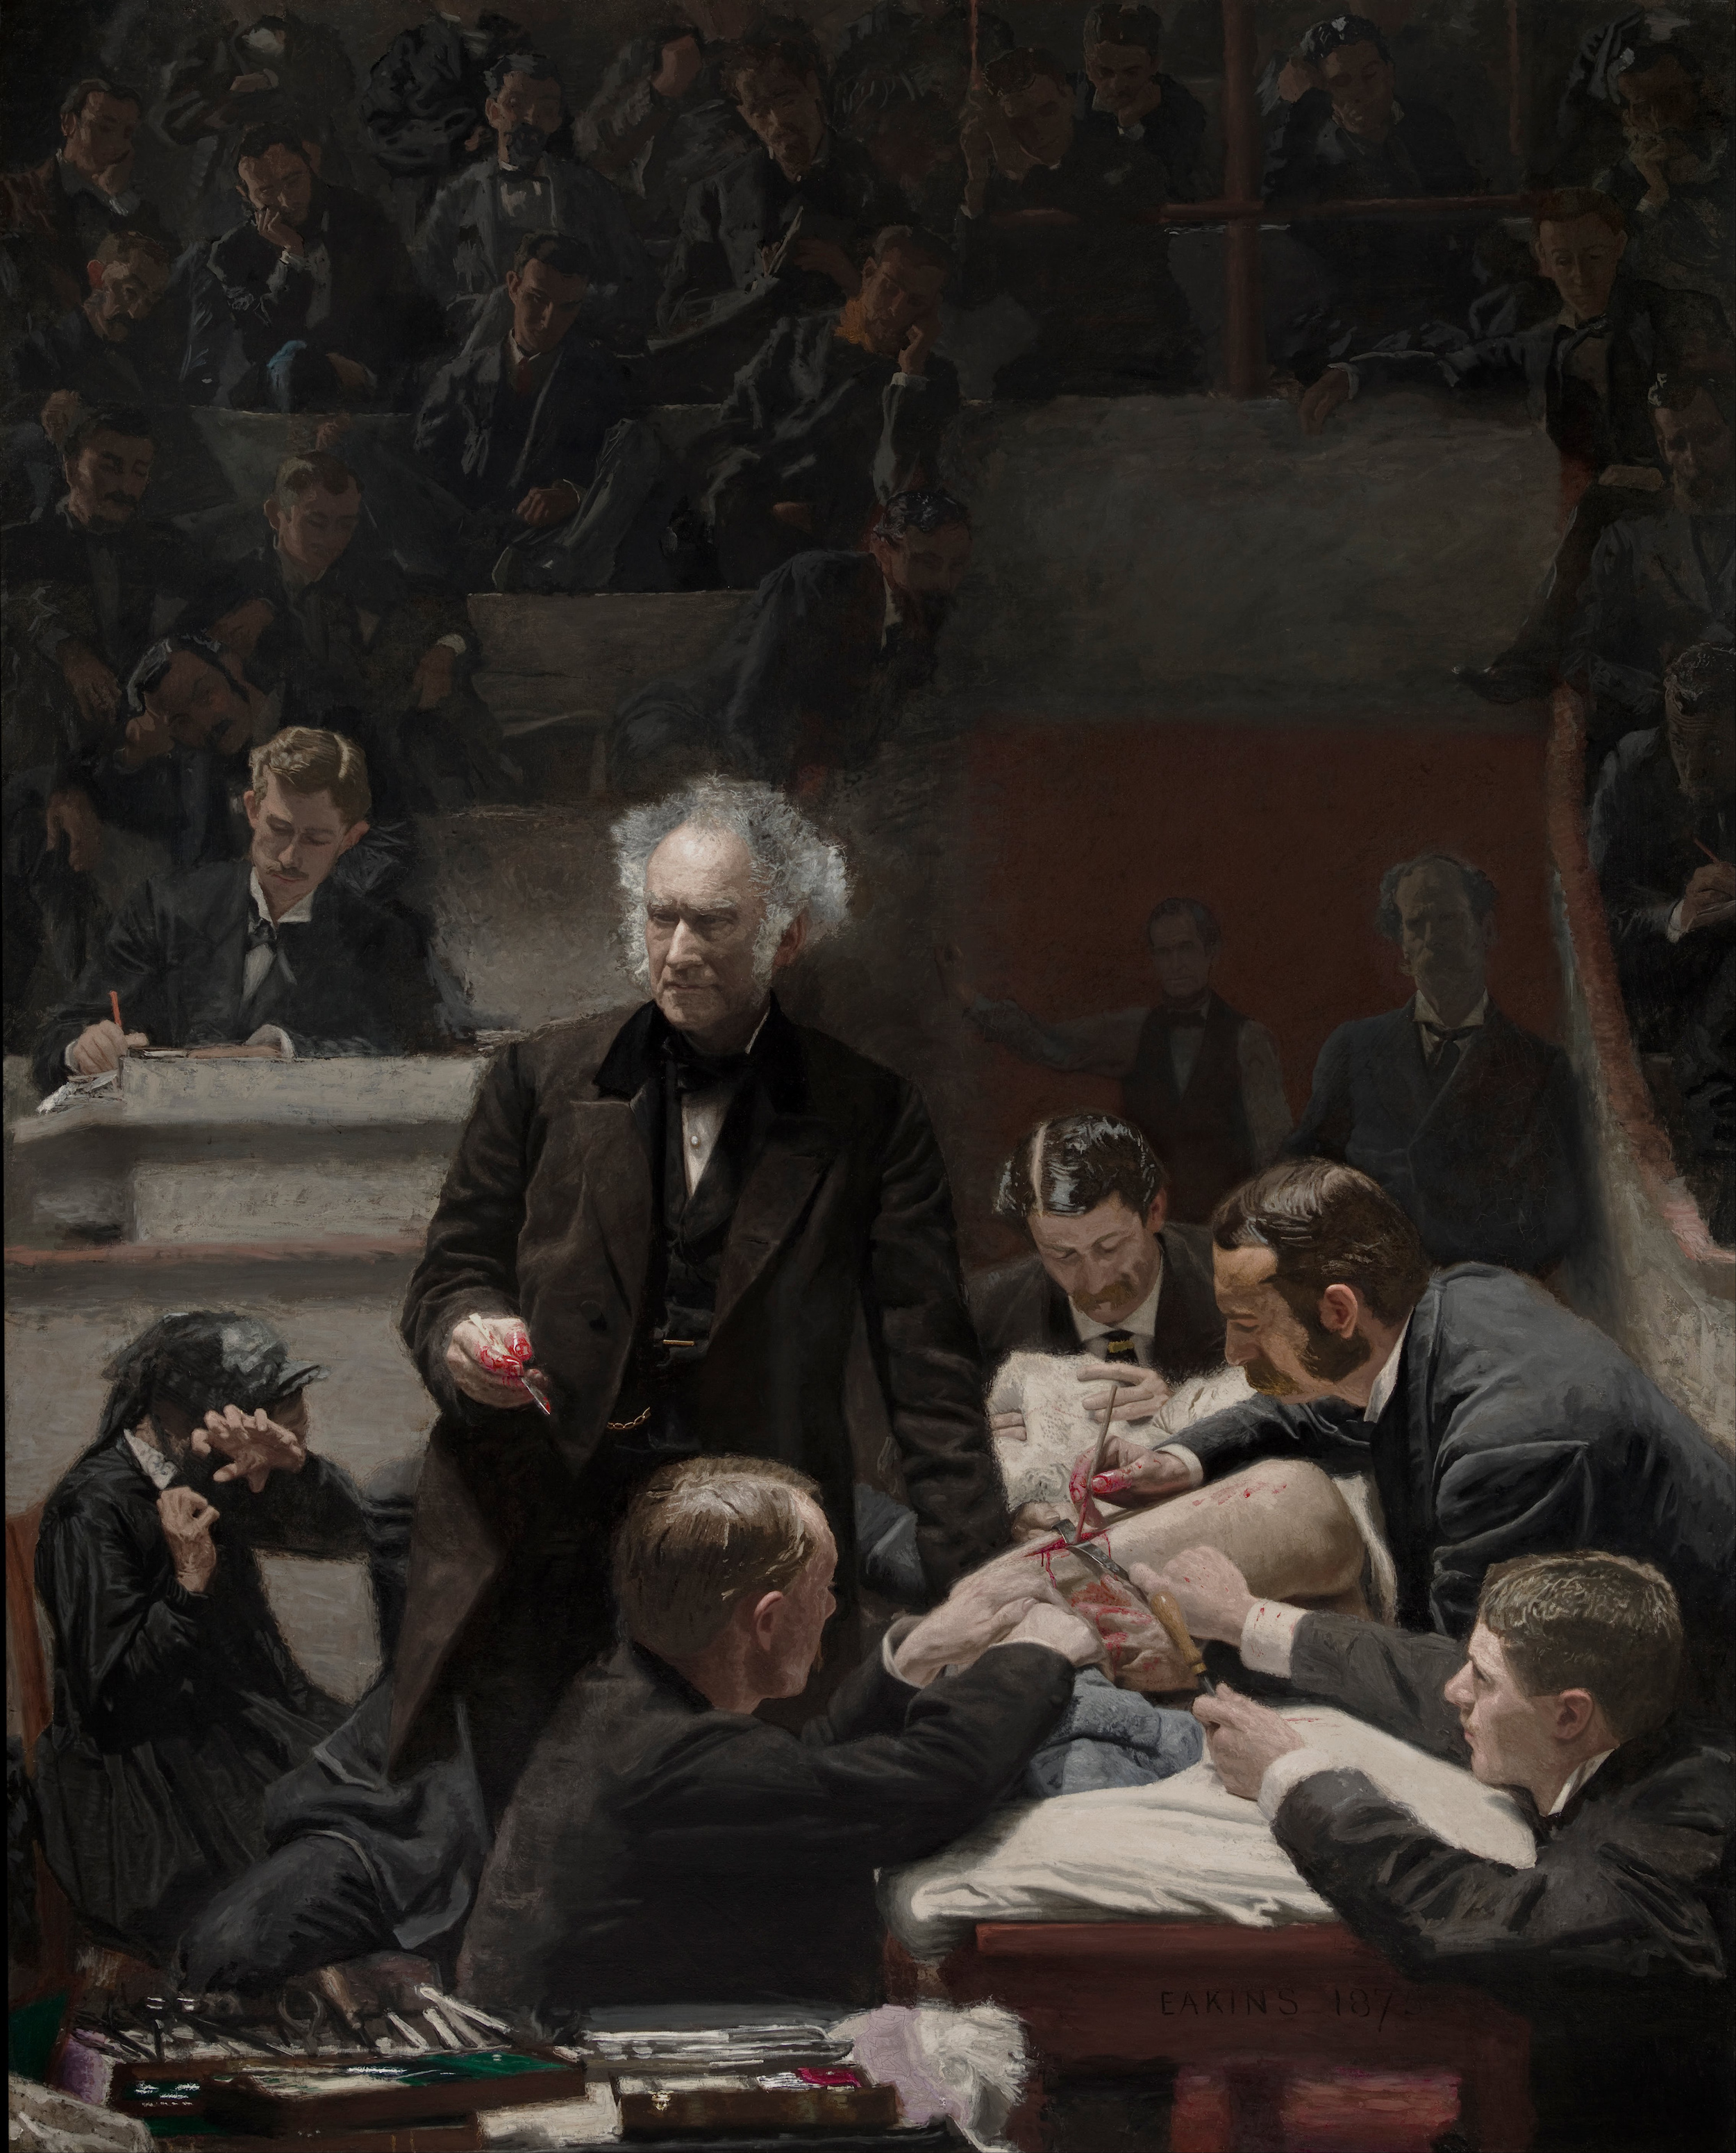 The Gross Clinic by Thomas Eakins - 1872 - 244 x 198 cm Philadelphia Museum of Art